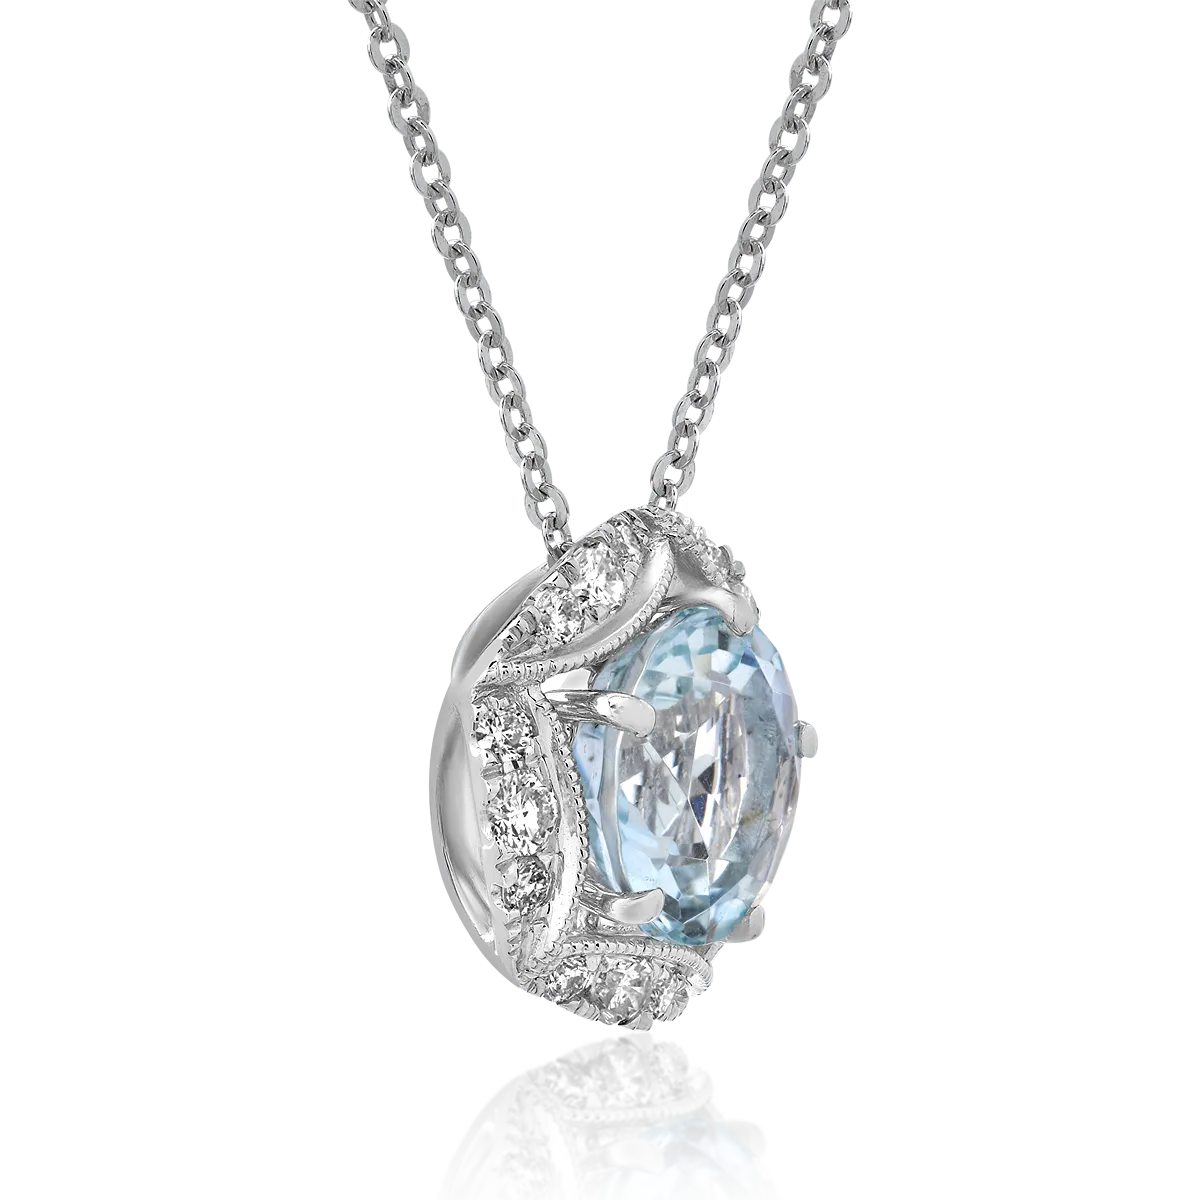 18K white gold pendant necklace with 2.1ct aquamarine and 0.31ct diamonds